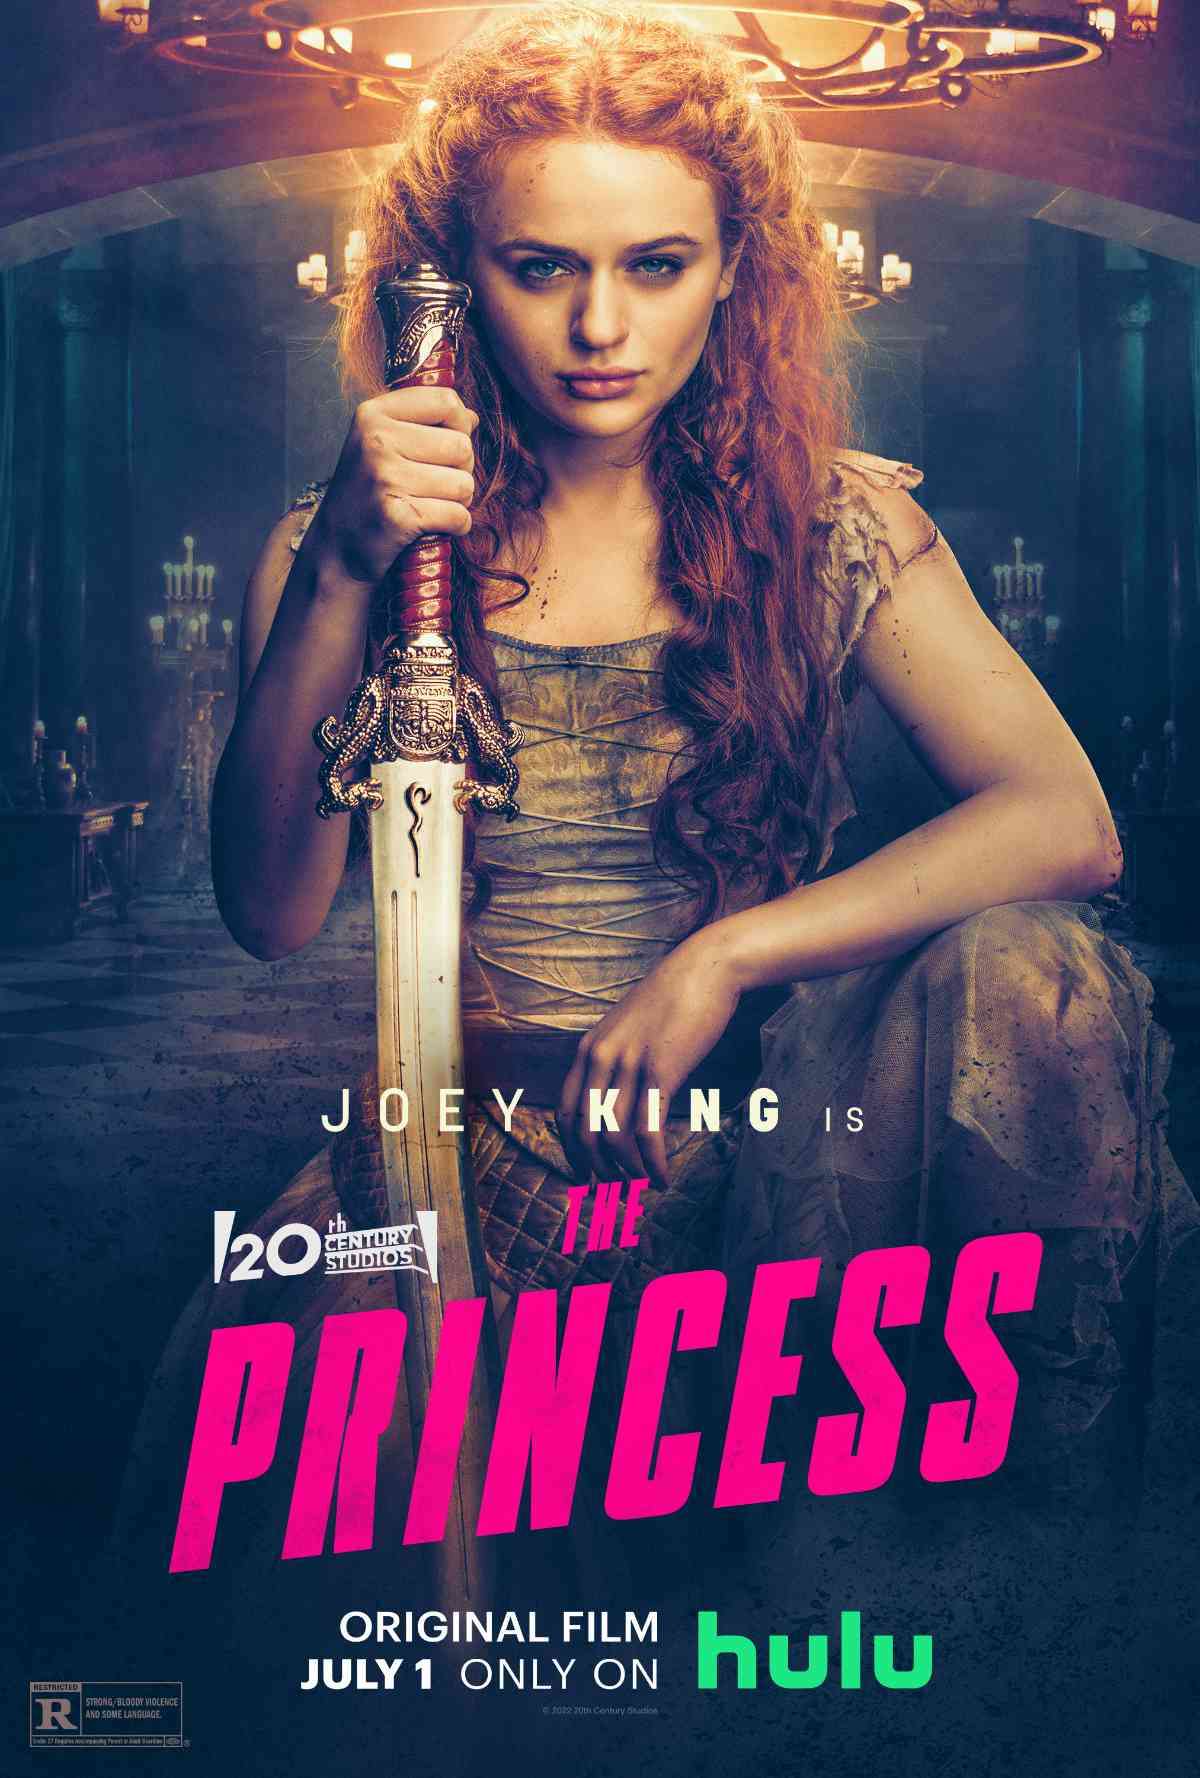 Joey King is The Princess